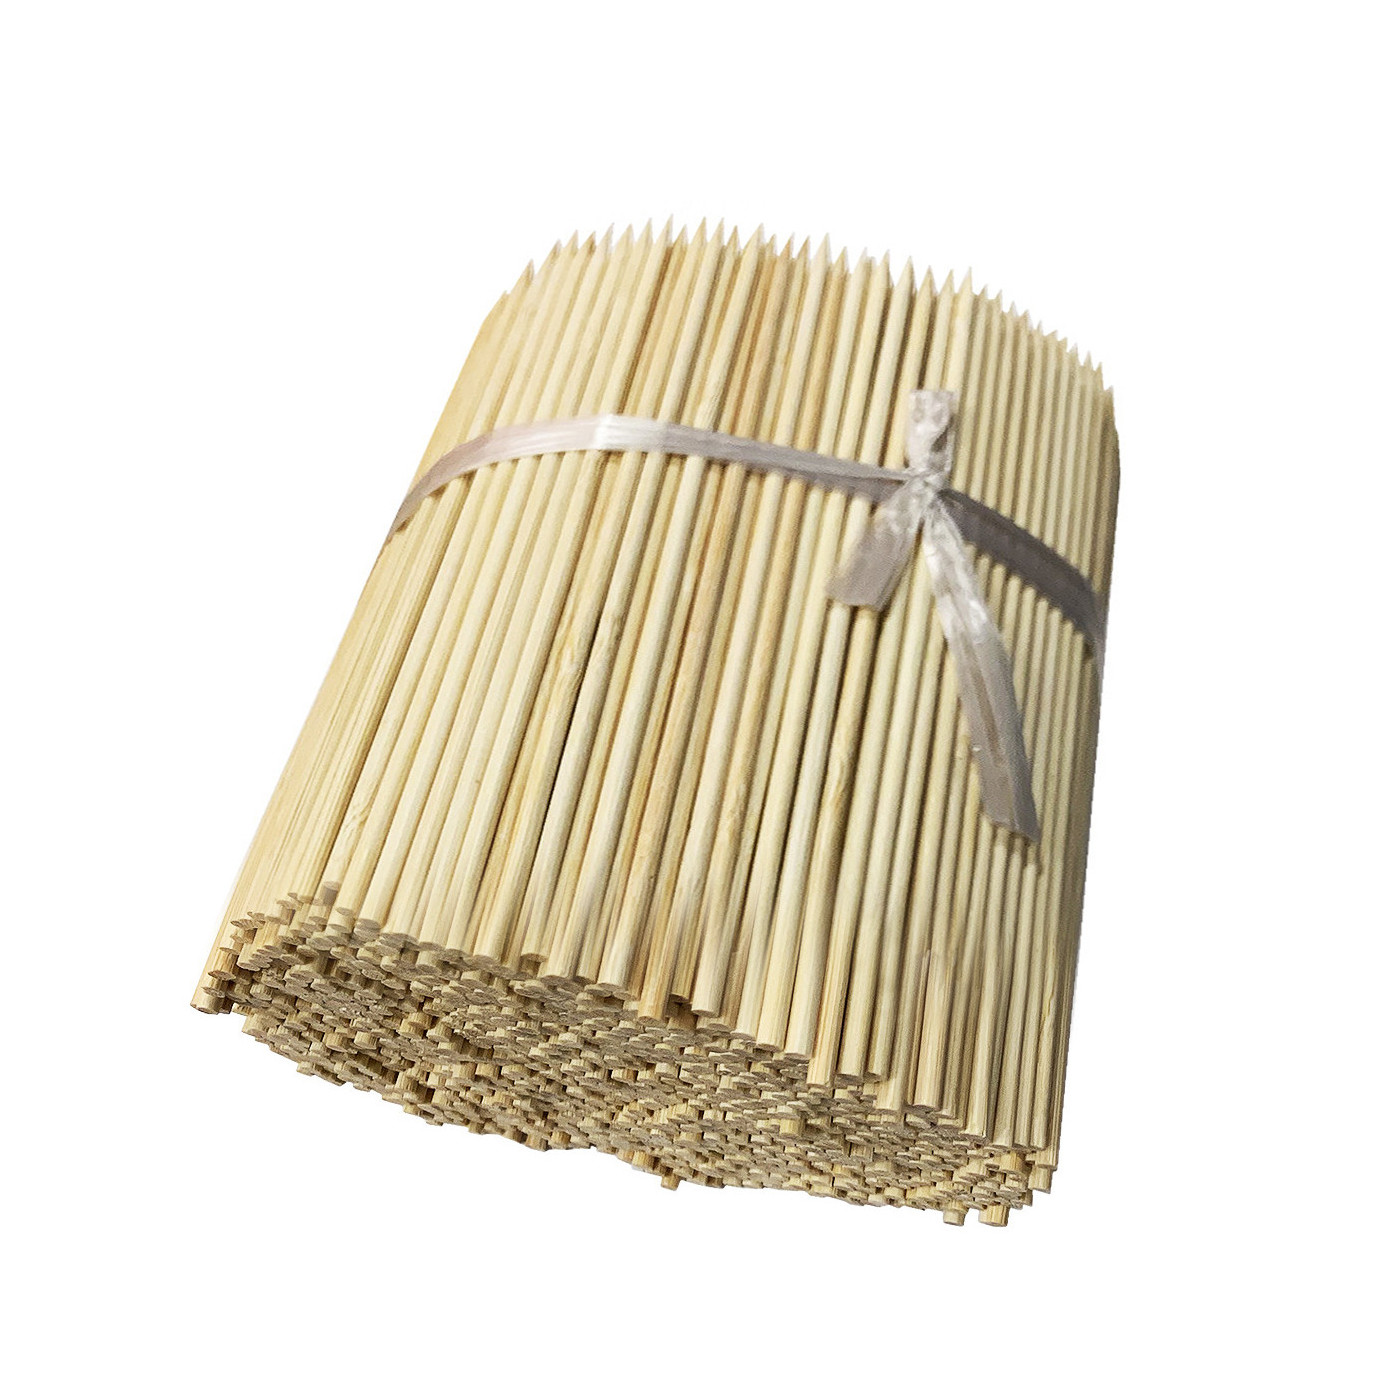 Conjunto de 1000 varas de bambu (4 mm x 18 cm)